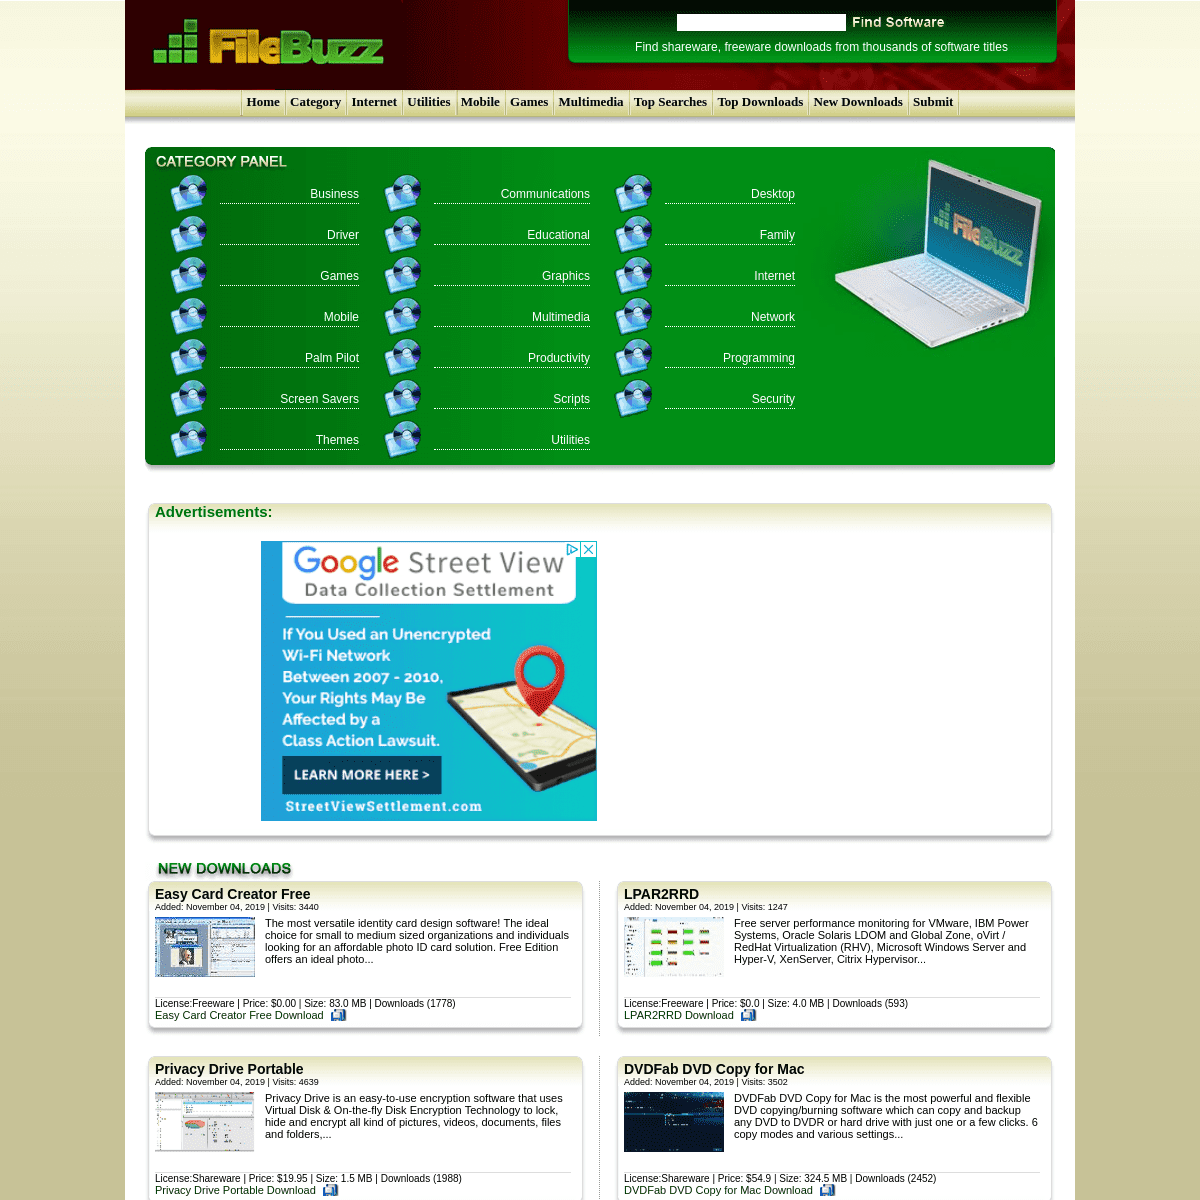 A complete backup of filebuzz.com